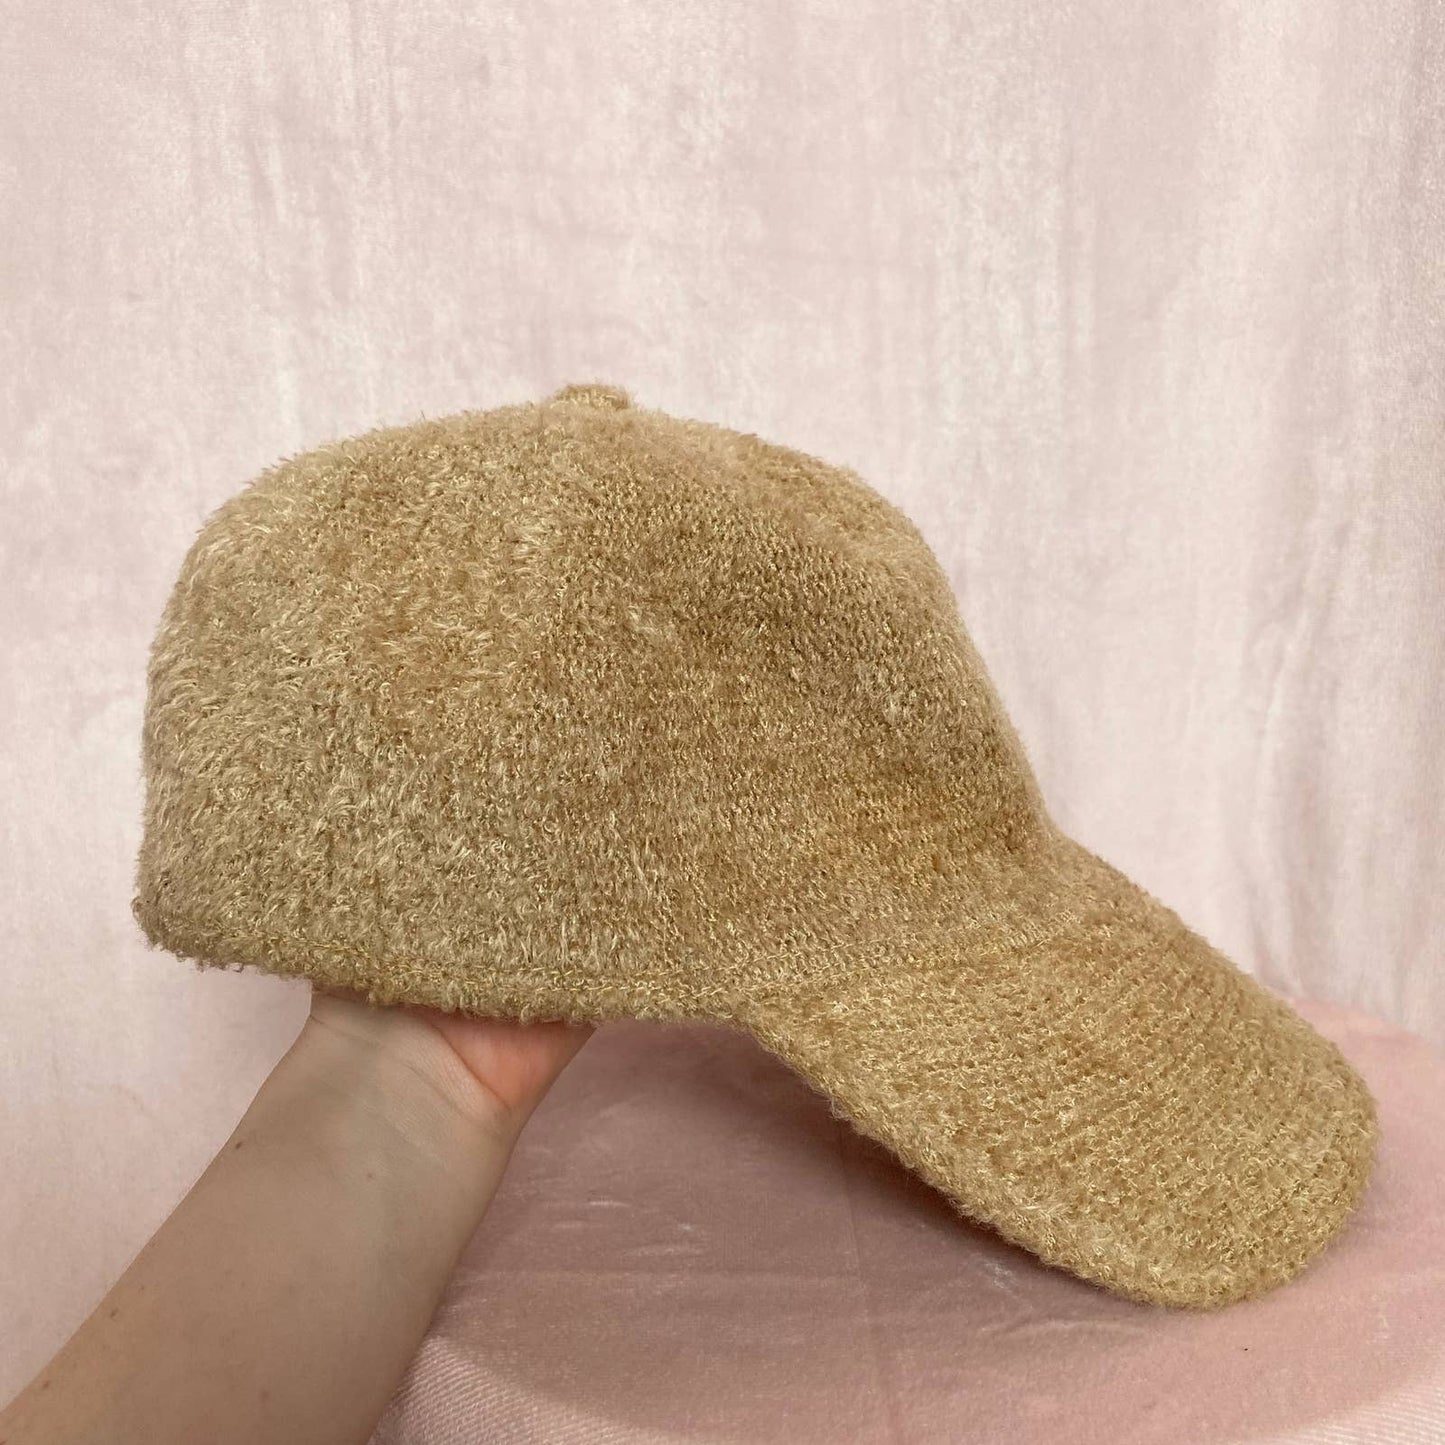 Secondhand Tan Sherpa Fuzzy Baseball Cap Hat